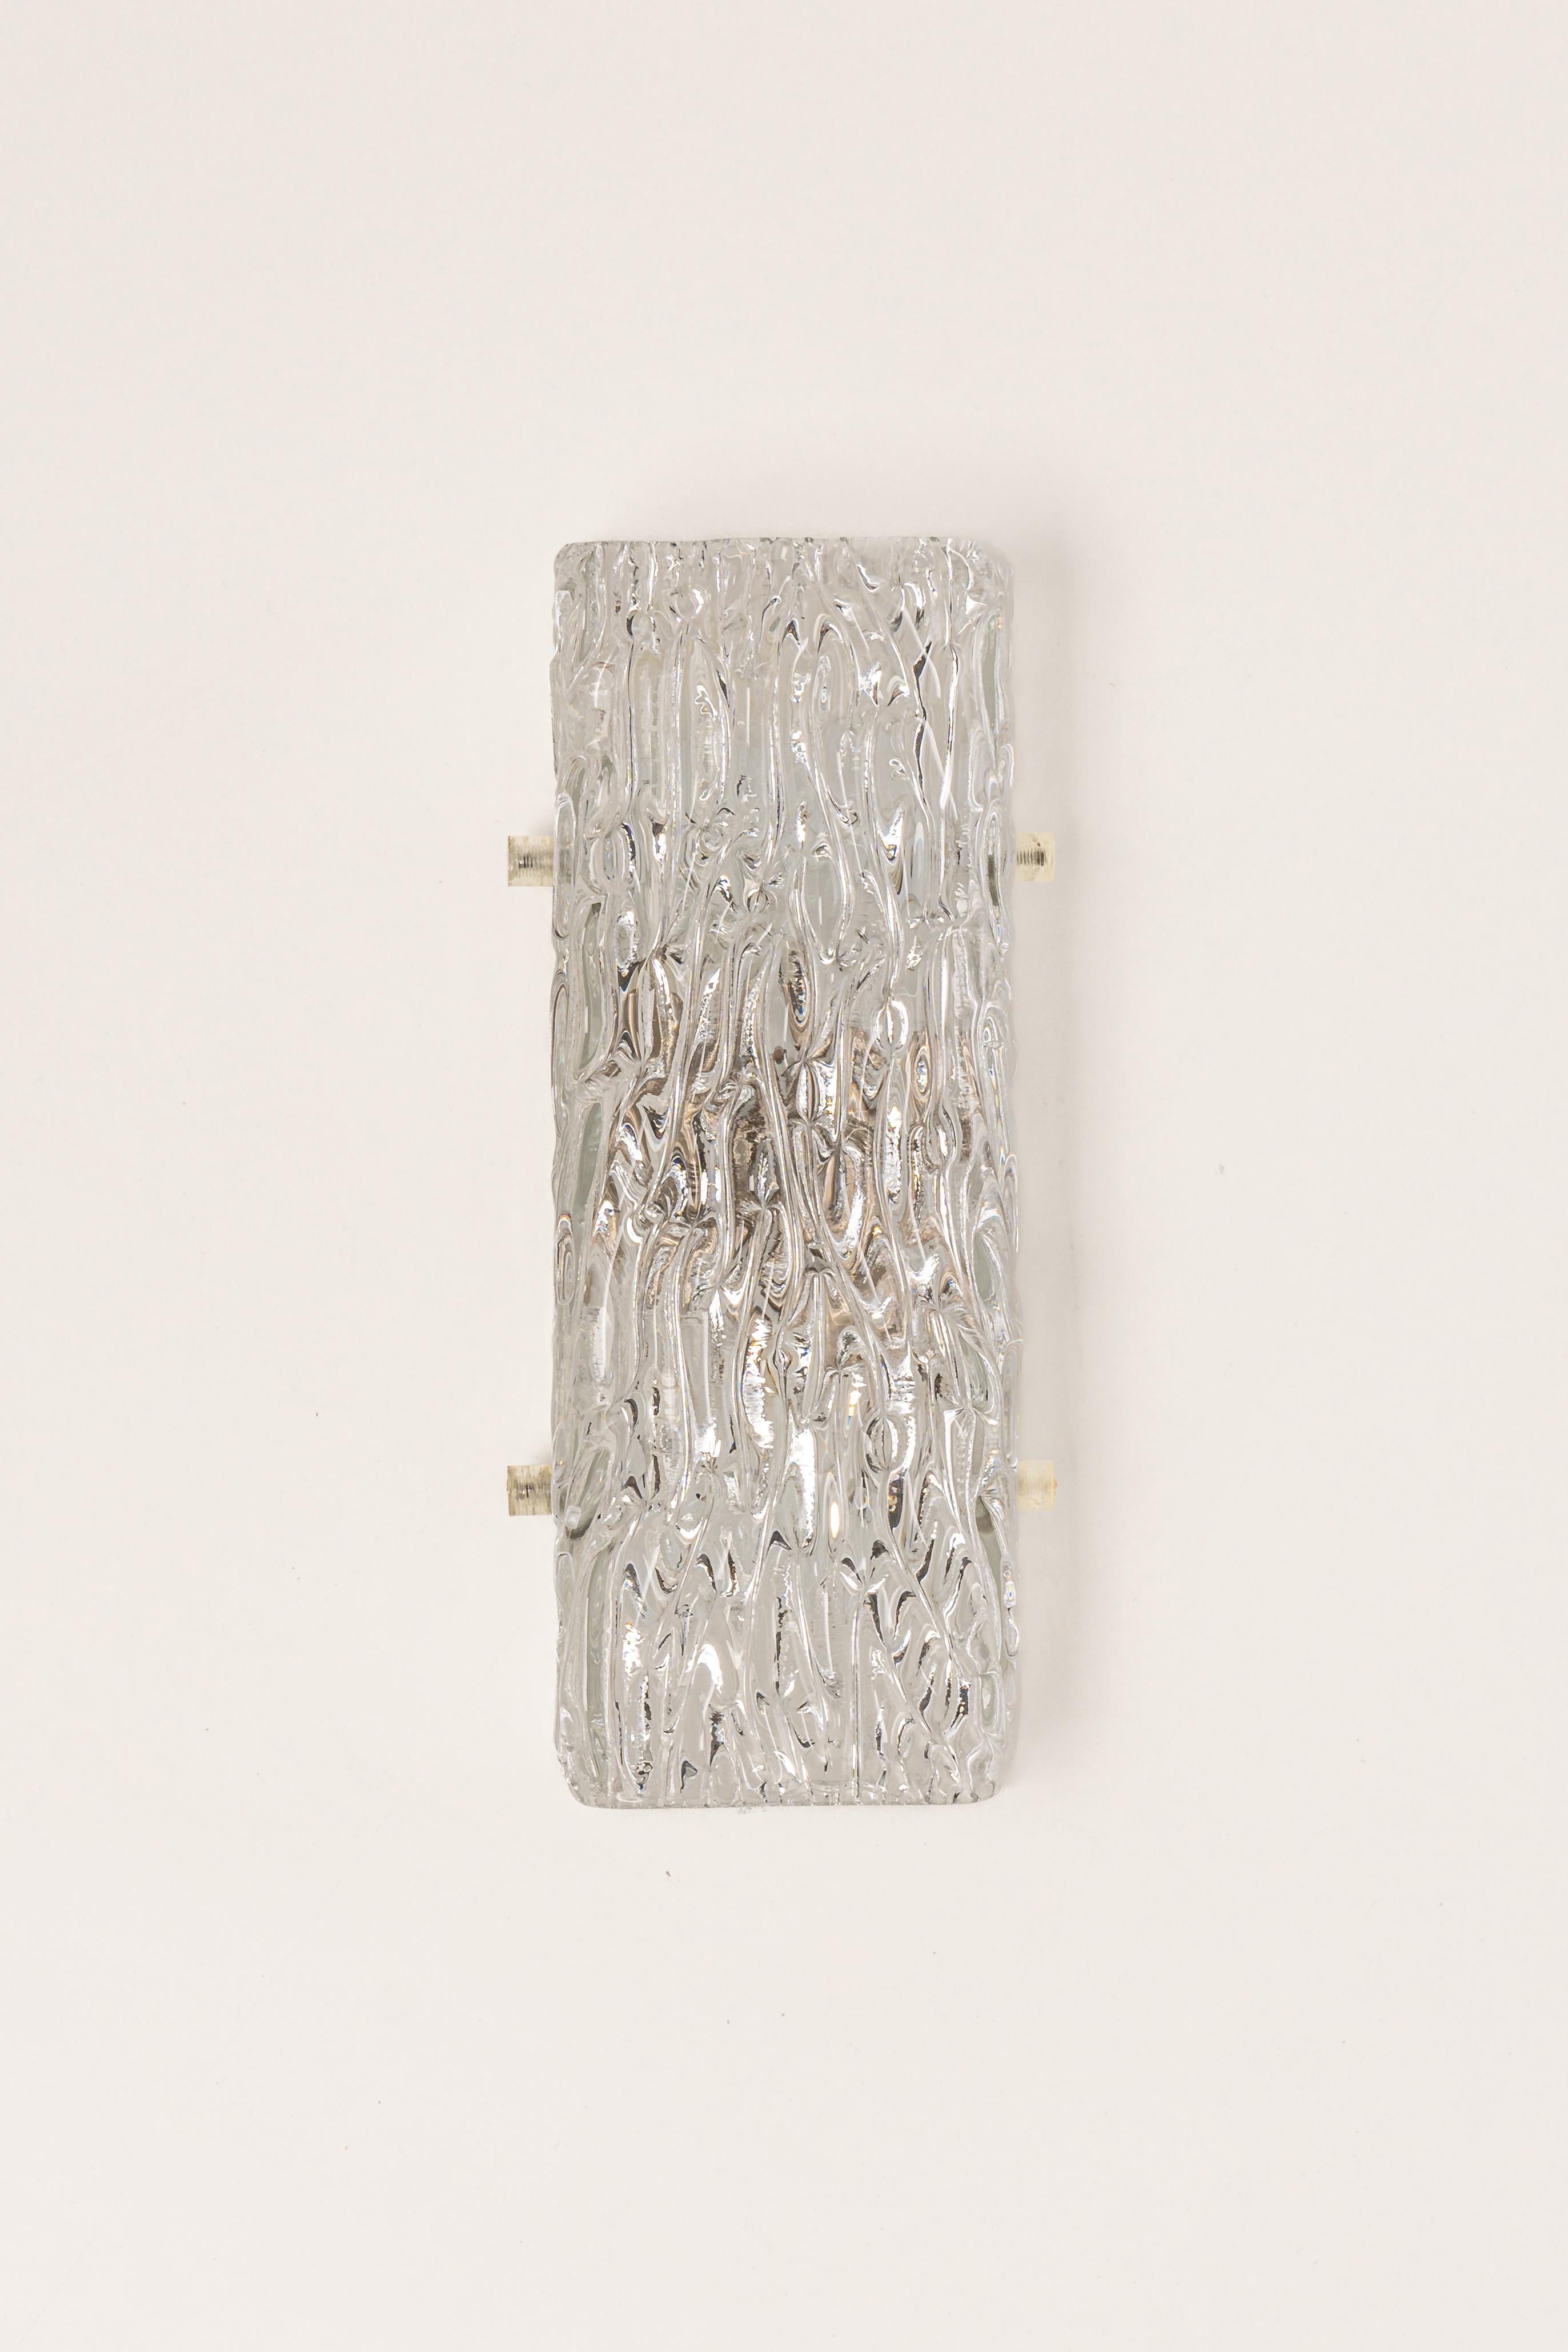 Mid-20th Century Pair of Kalmar Sconces Glass Wall Lights, Austria, 1960s For Sale